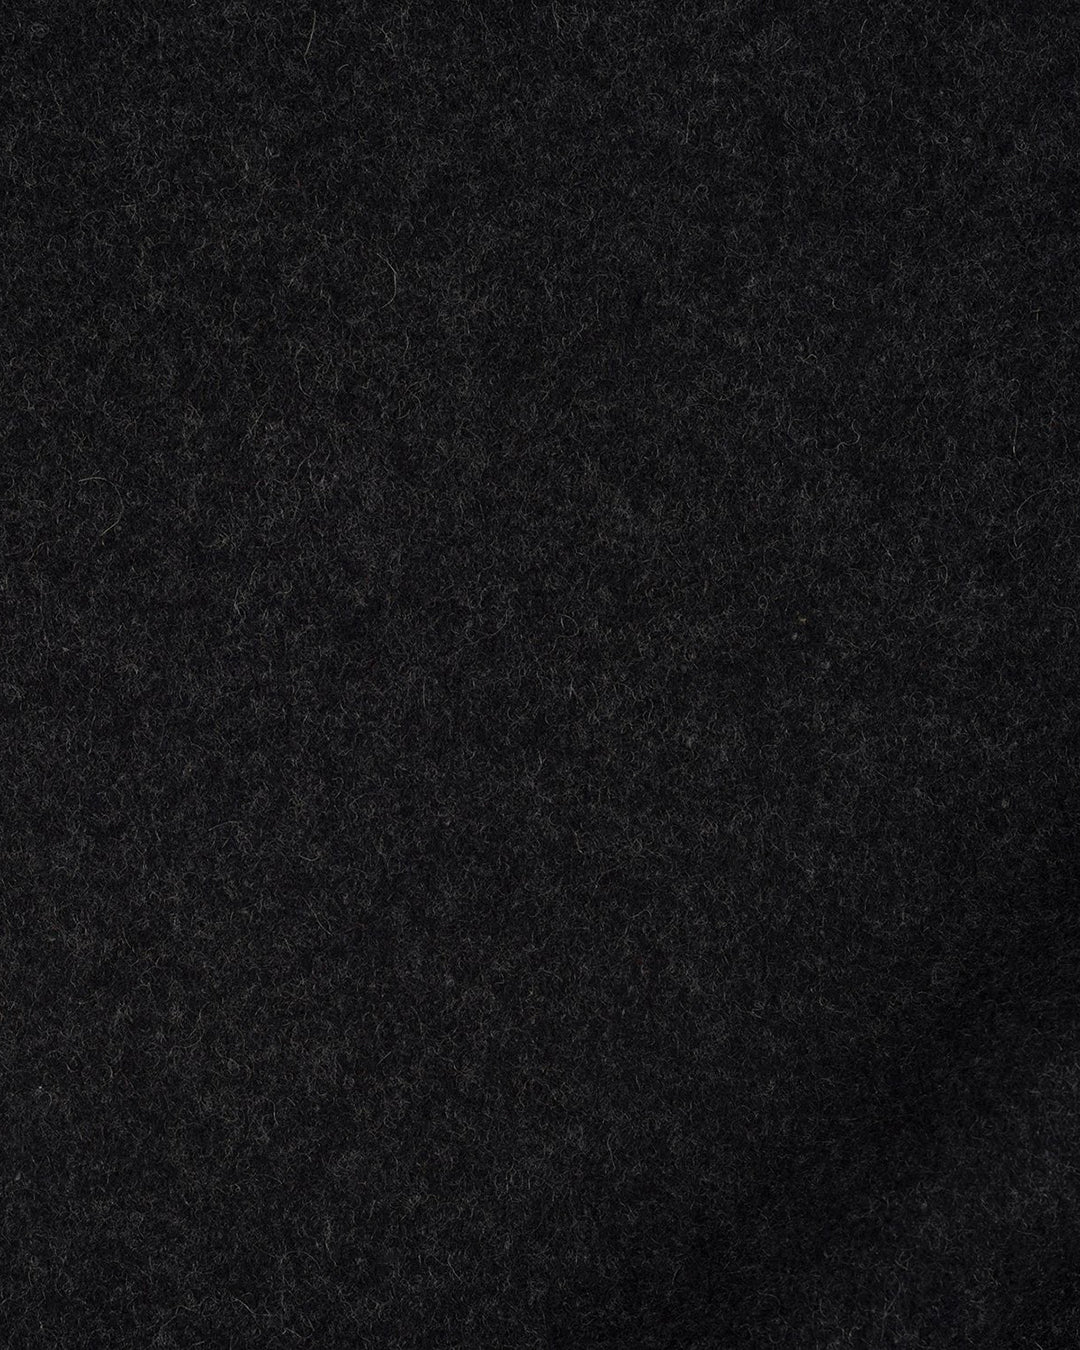 Gurkha Pant in Charcoal Grey 100% Wool Flannel